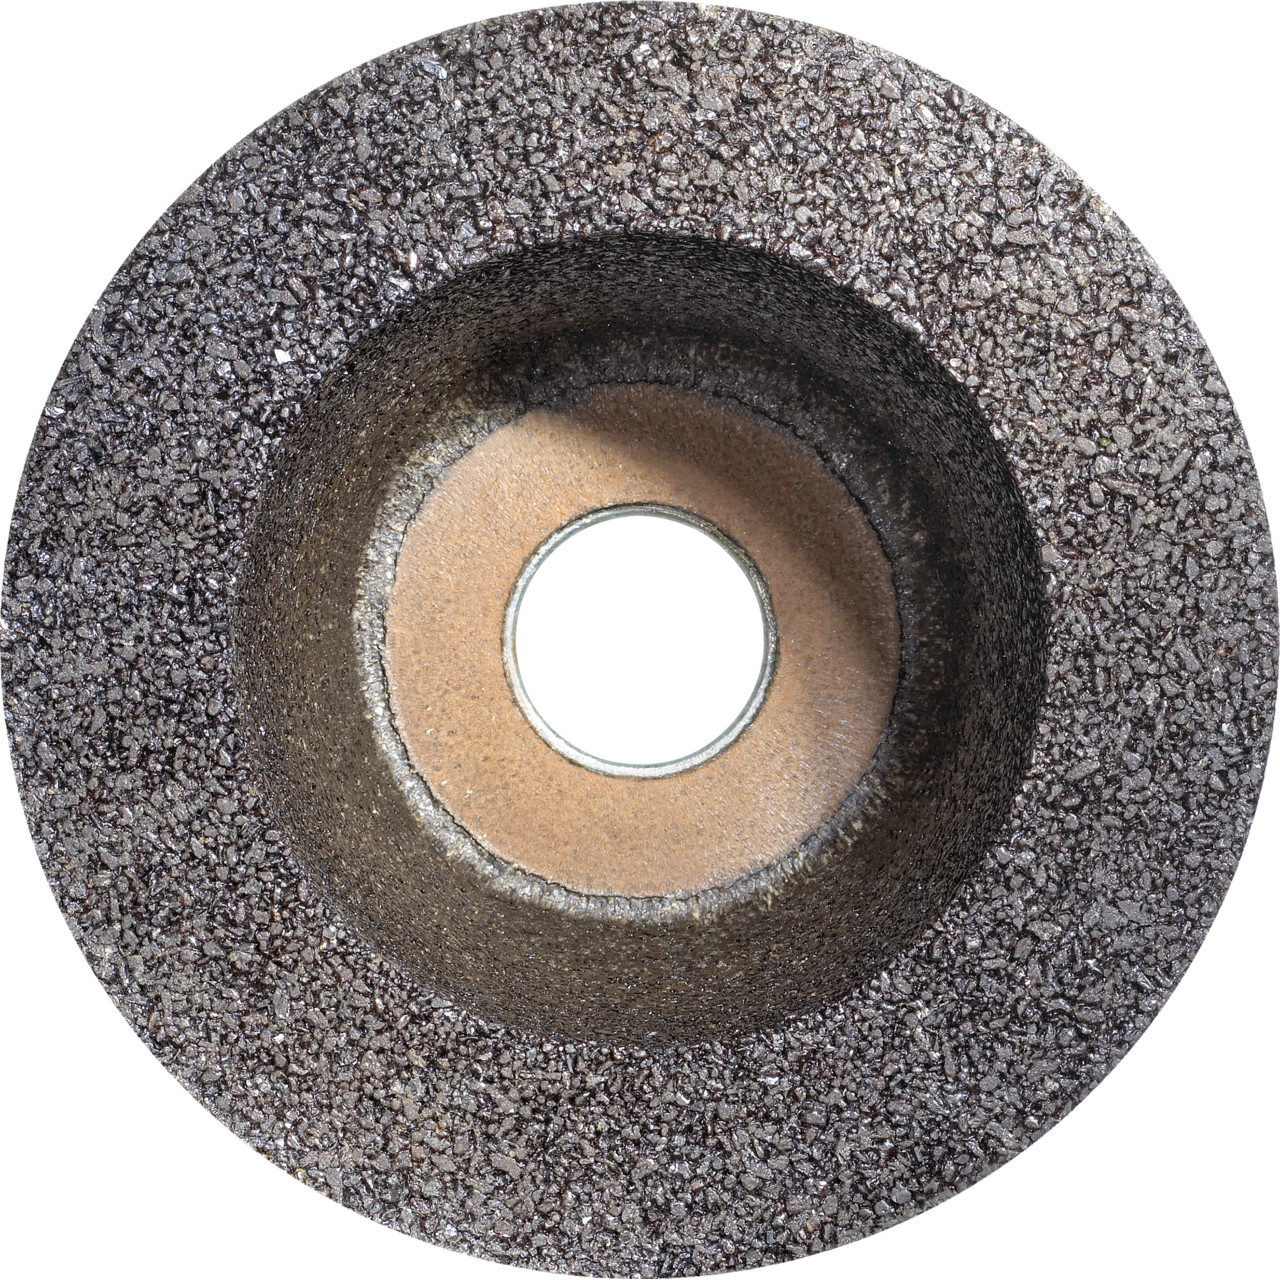 Tyrolit Tazza in resina DxTxGE 100x45xM14 Per pietra, forma: ruota a tazza 6ZB, Art. 89383